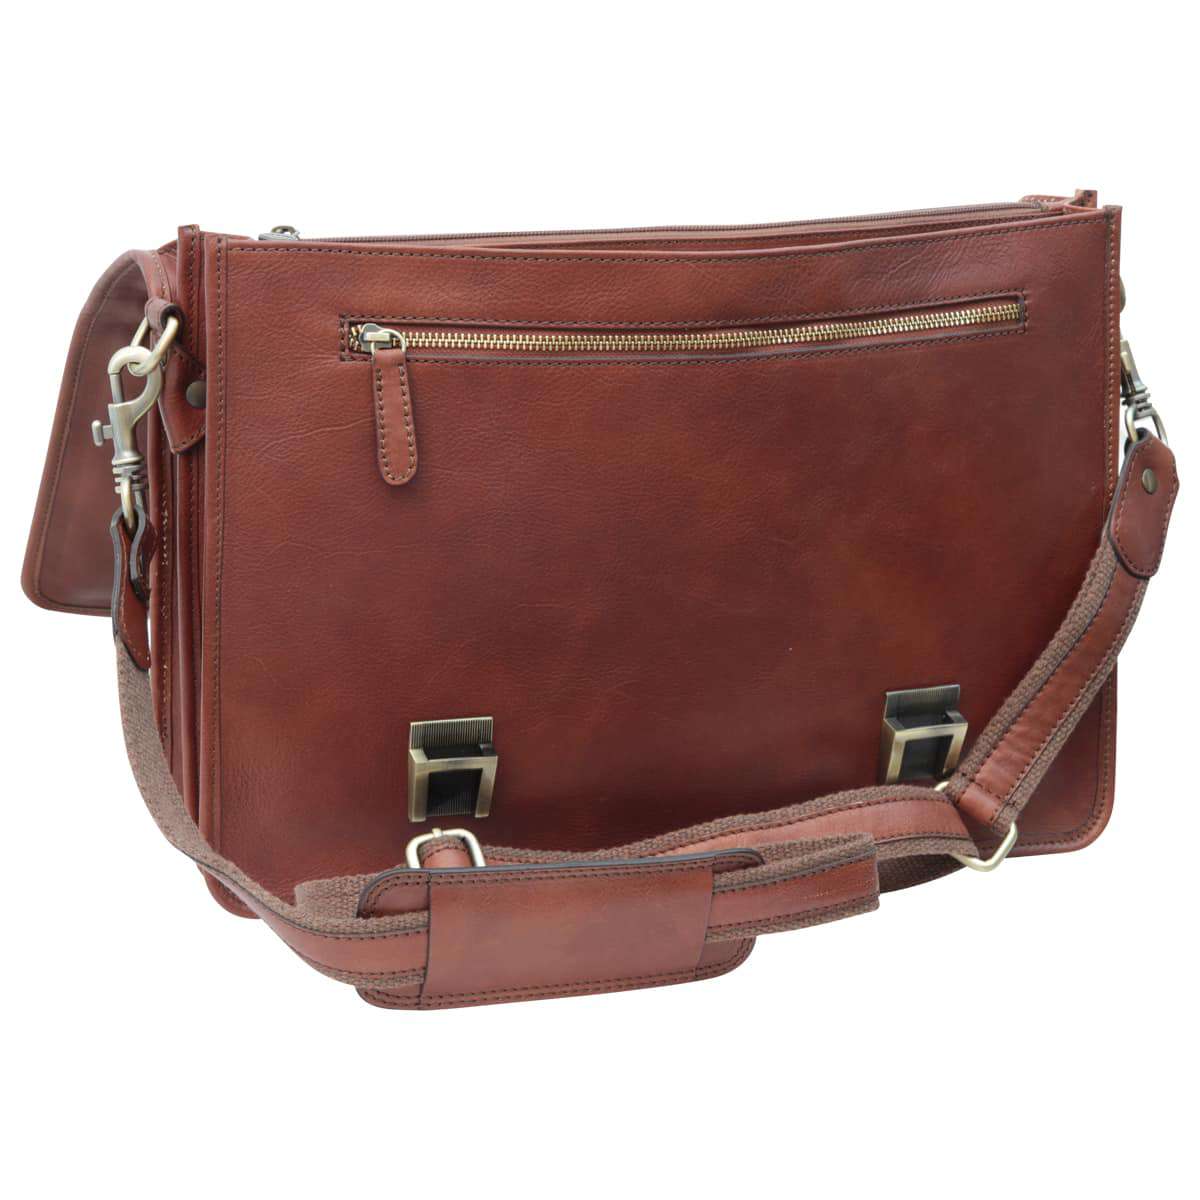 Soft Calfskin Leather Briefcase with shoulder strap - Brown | 030991MA UK | Old Angler Firenze